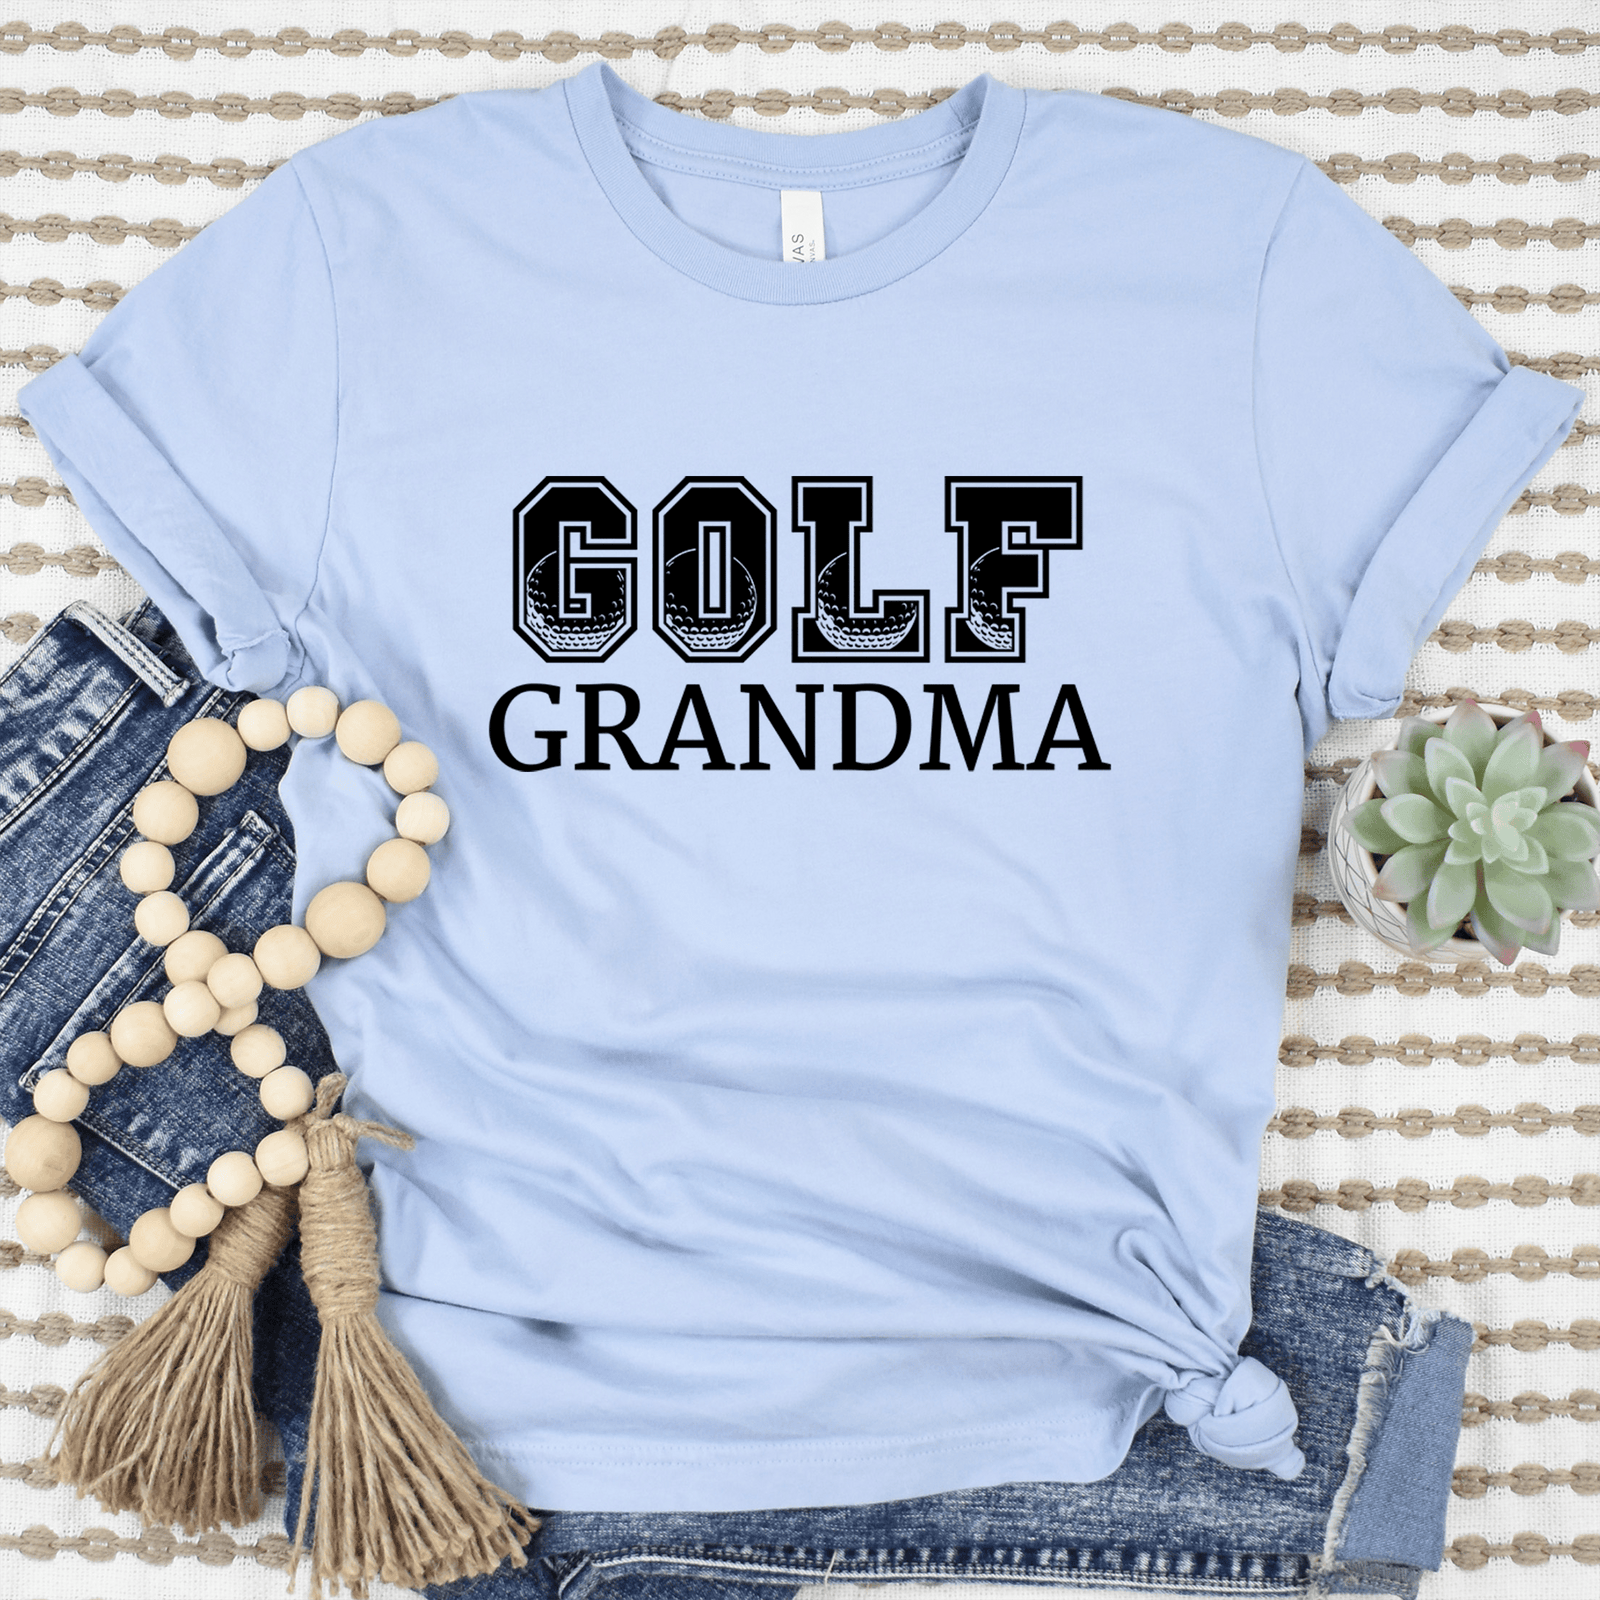 Womens Light Blue T Shirt with Golf-Grandma design